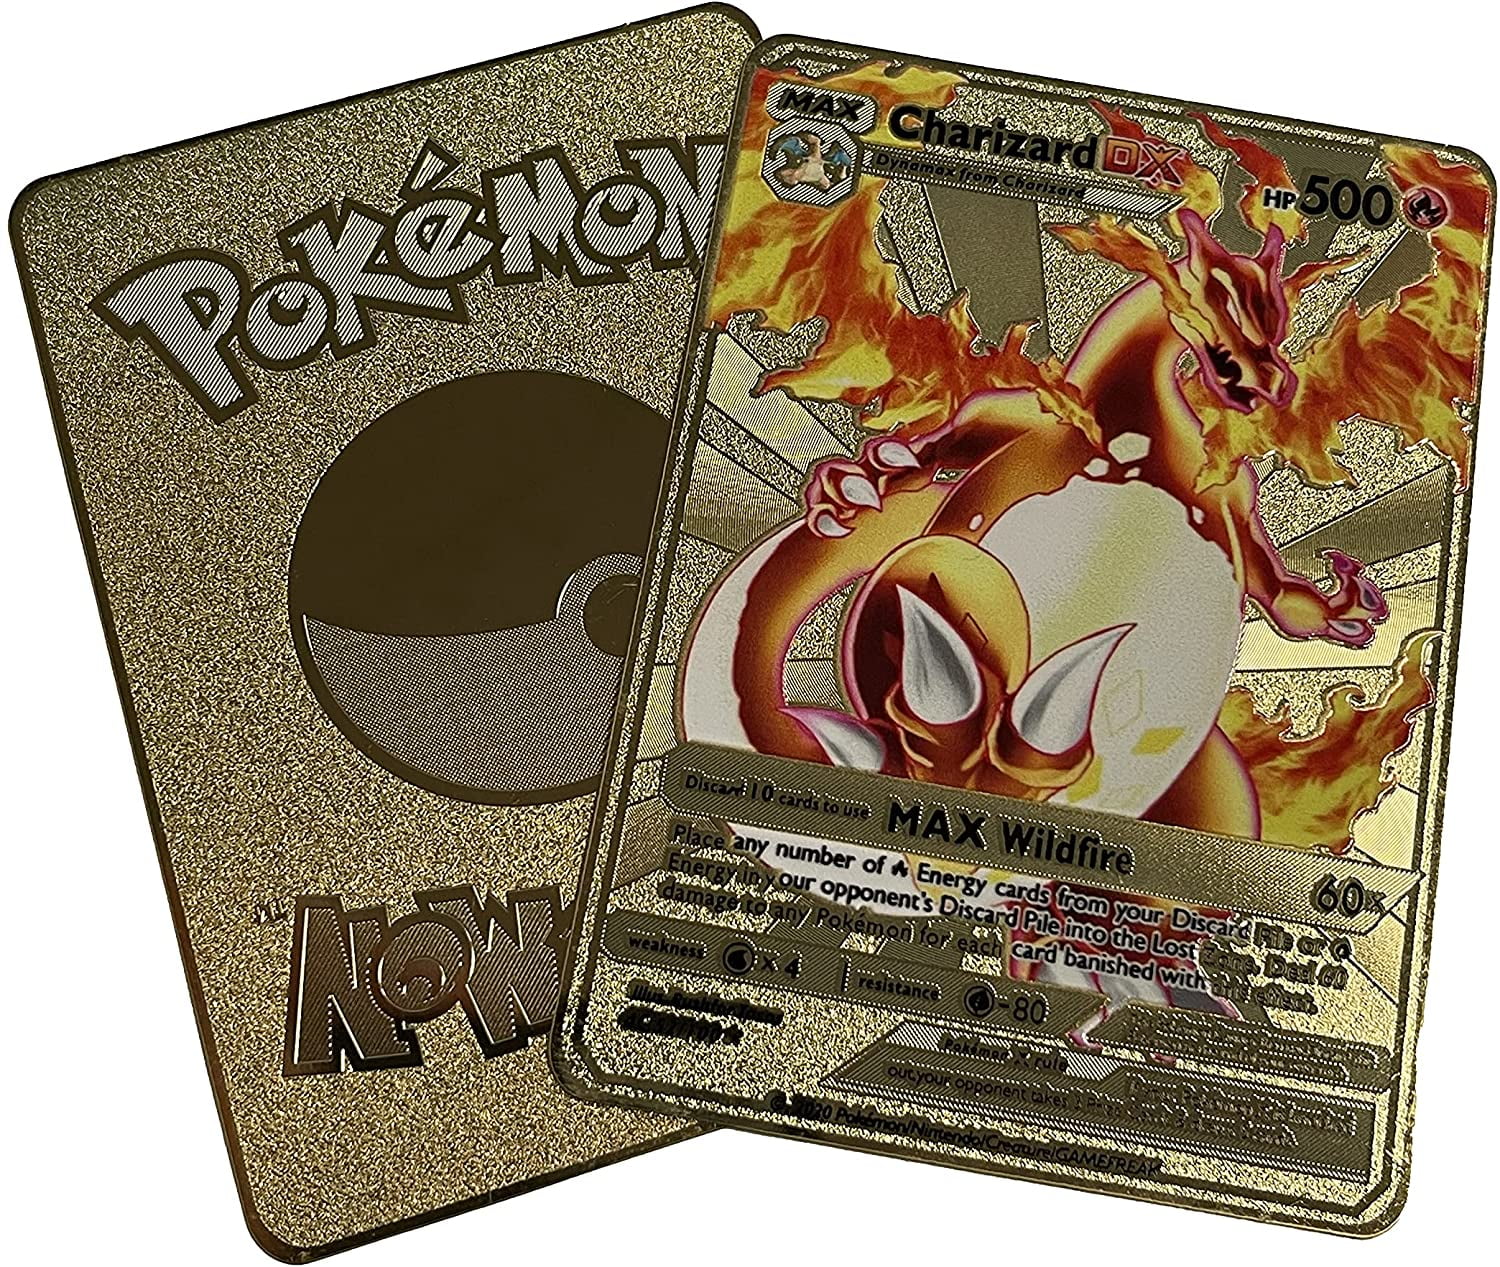 Charizard DX Custom Metal Card，Super Rare High-Strength Card（Rainbow Gold Pokemon Card